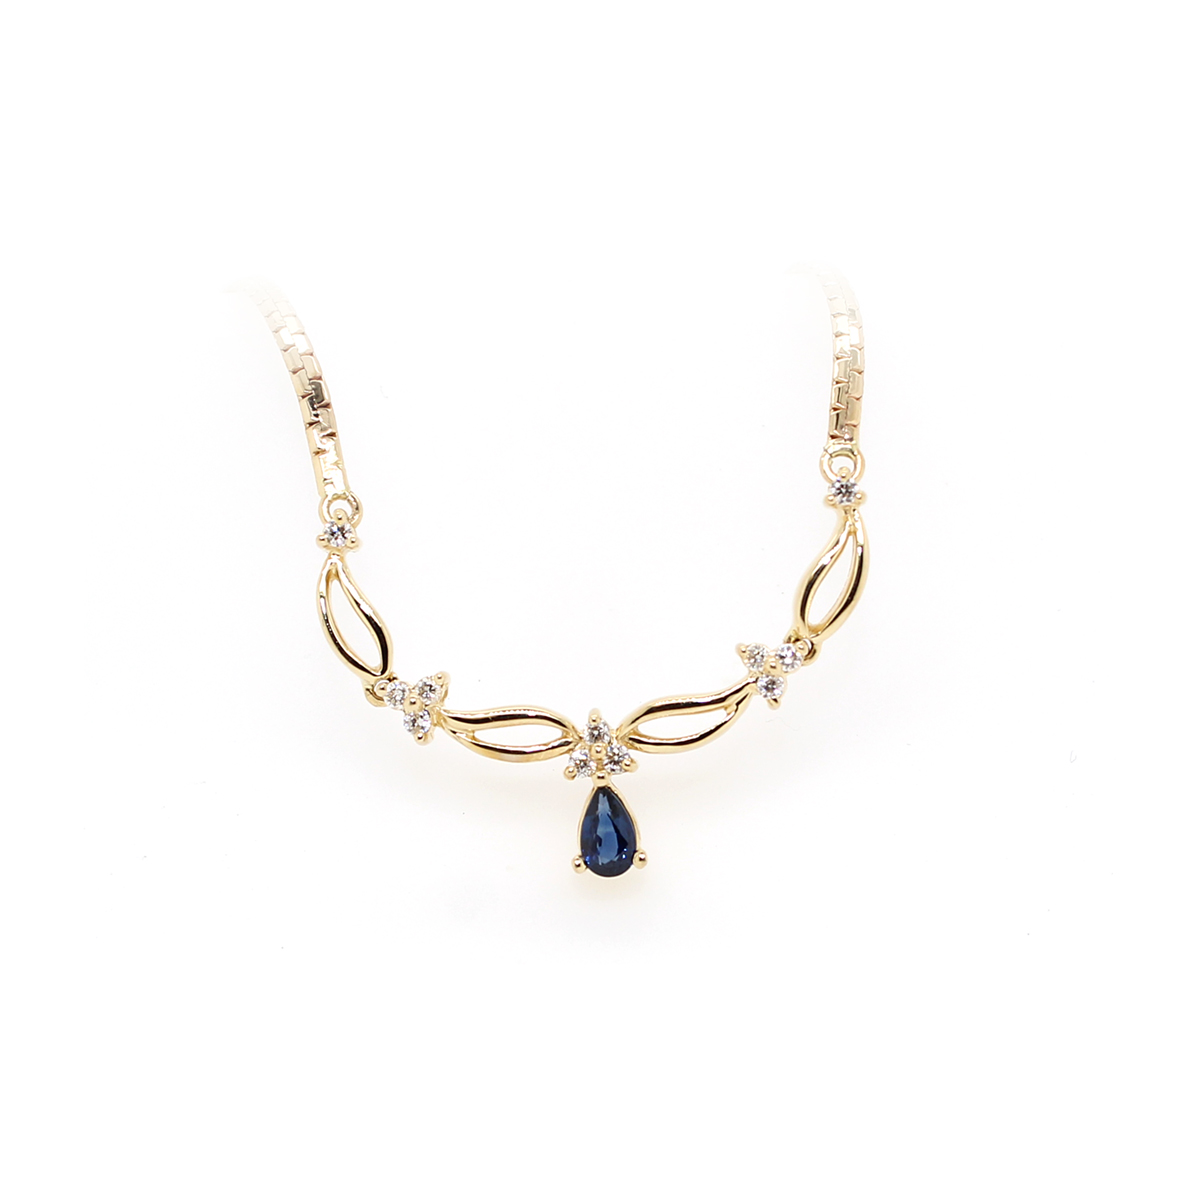 Estate 14 karat yellow gold Blue sapphire and diamond necklace having a flat fox tail chain  measuring 16.5